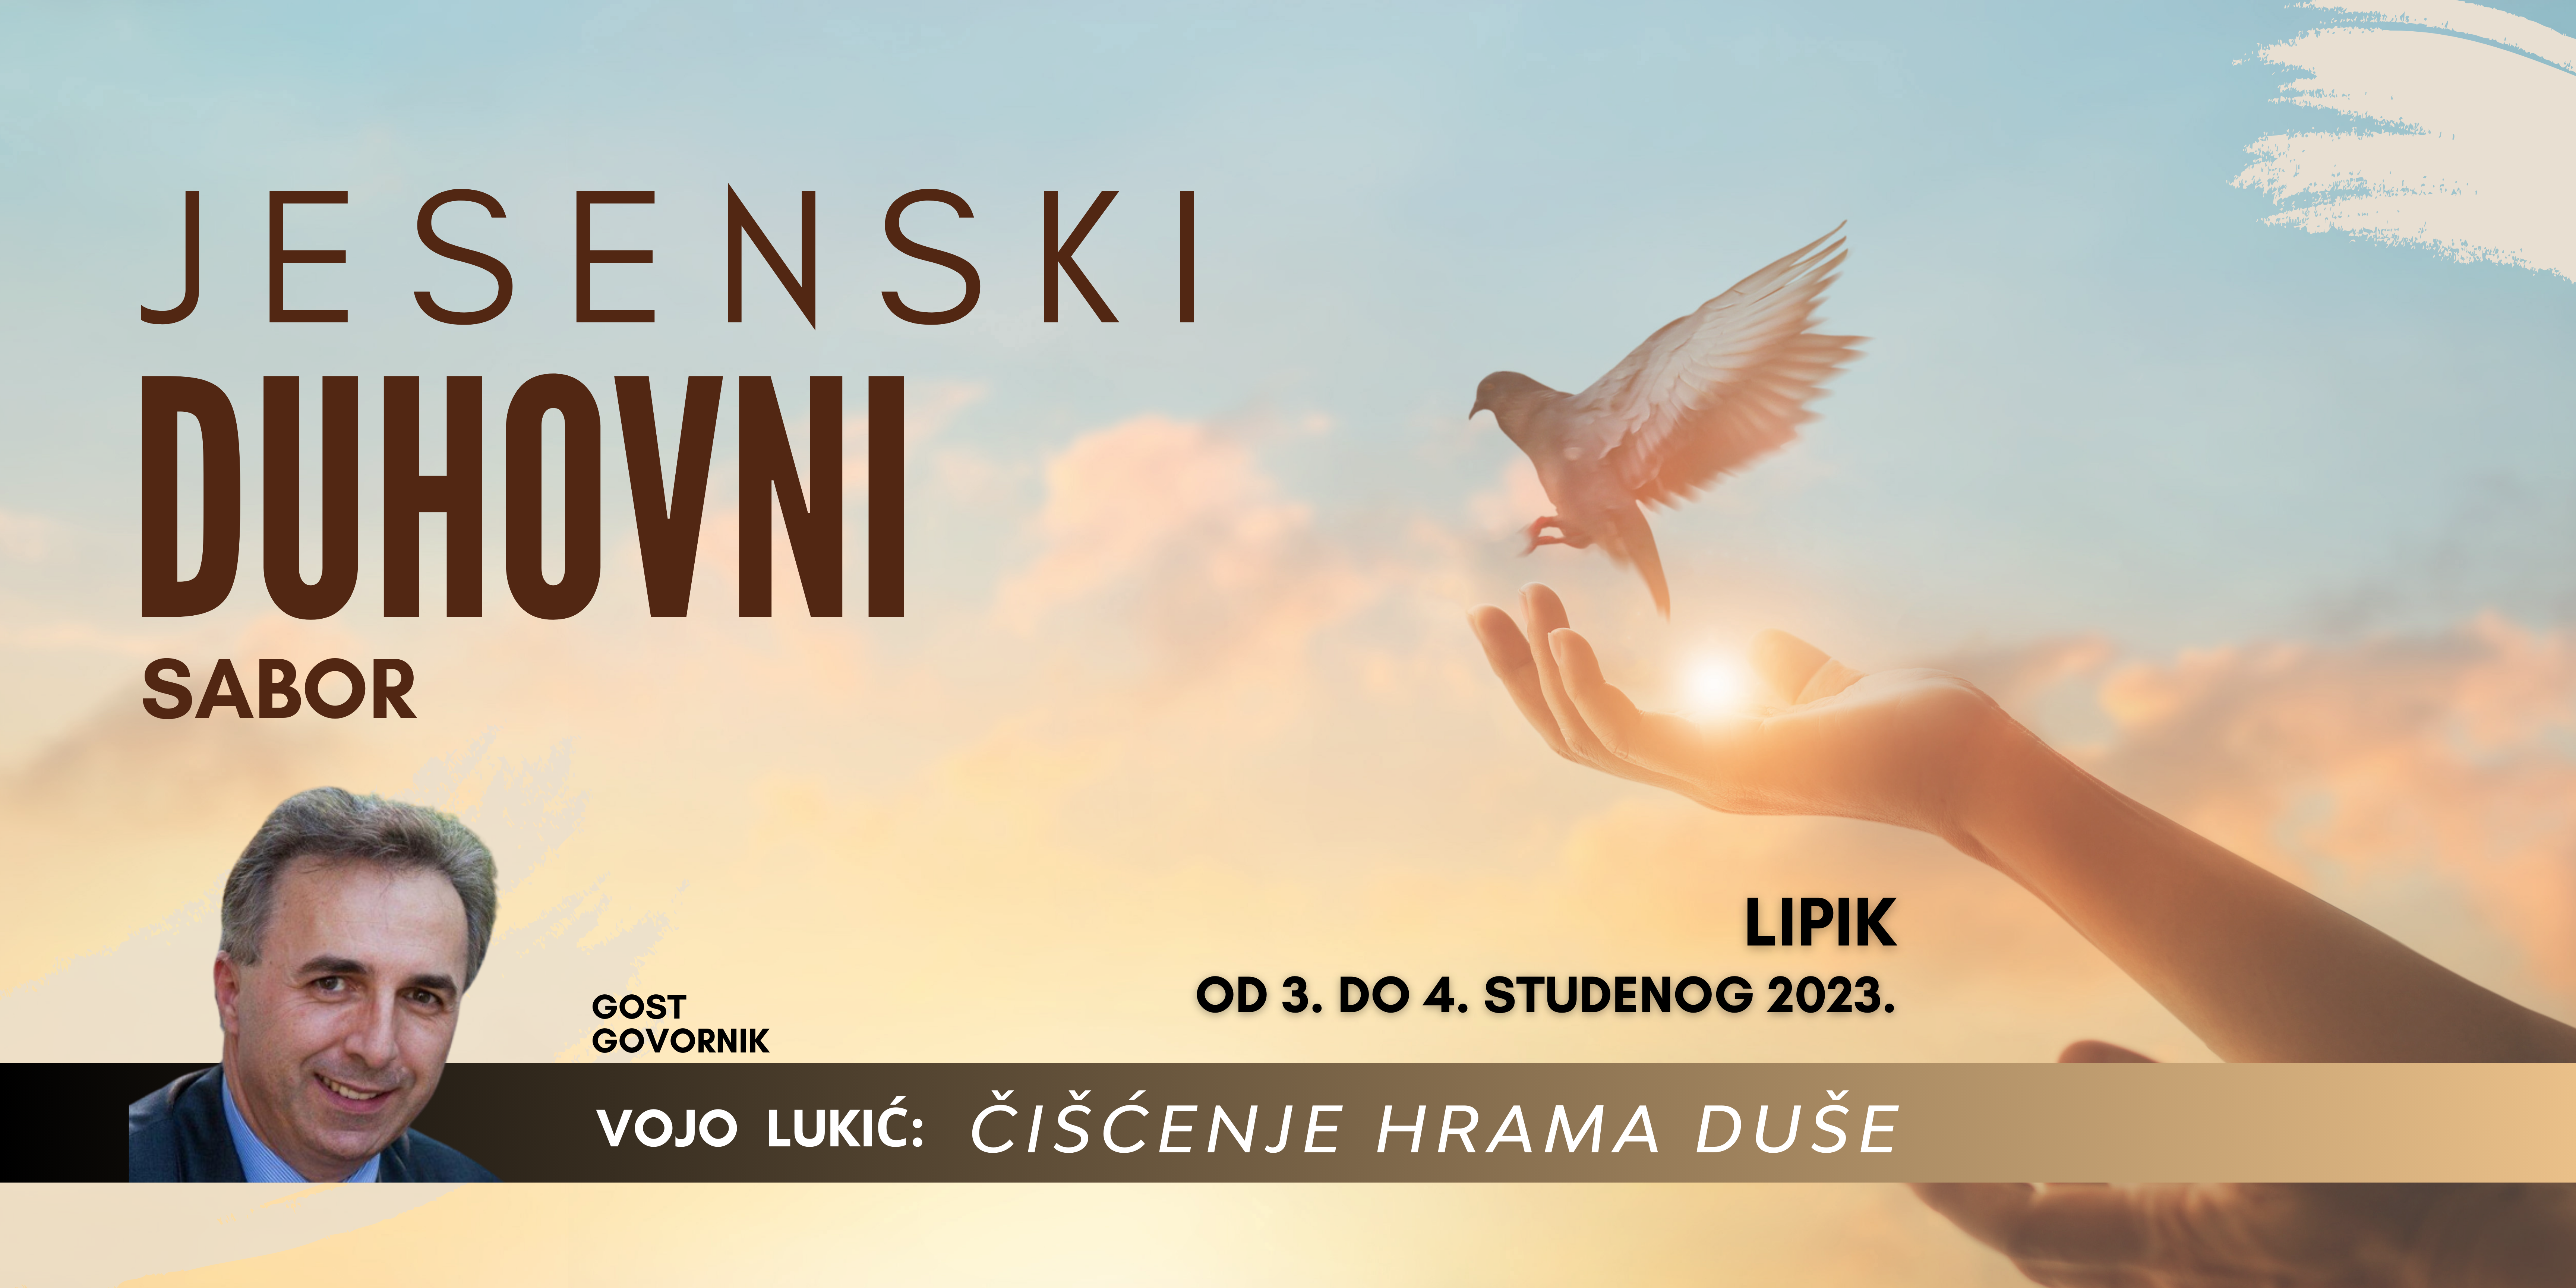 Jesenski sabor web banner